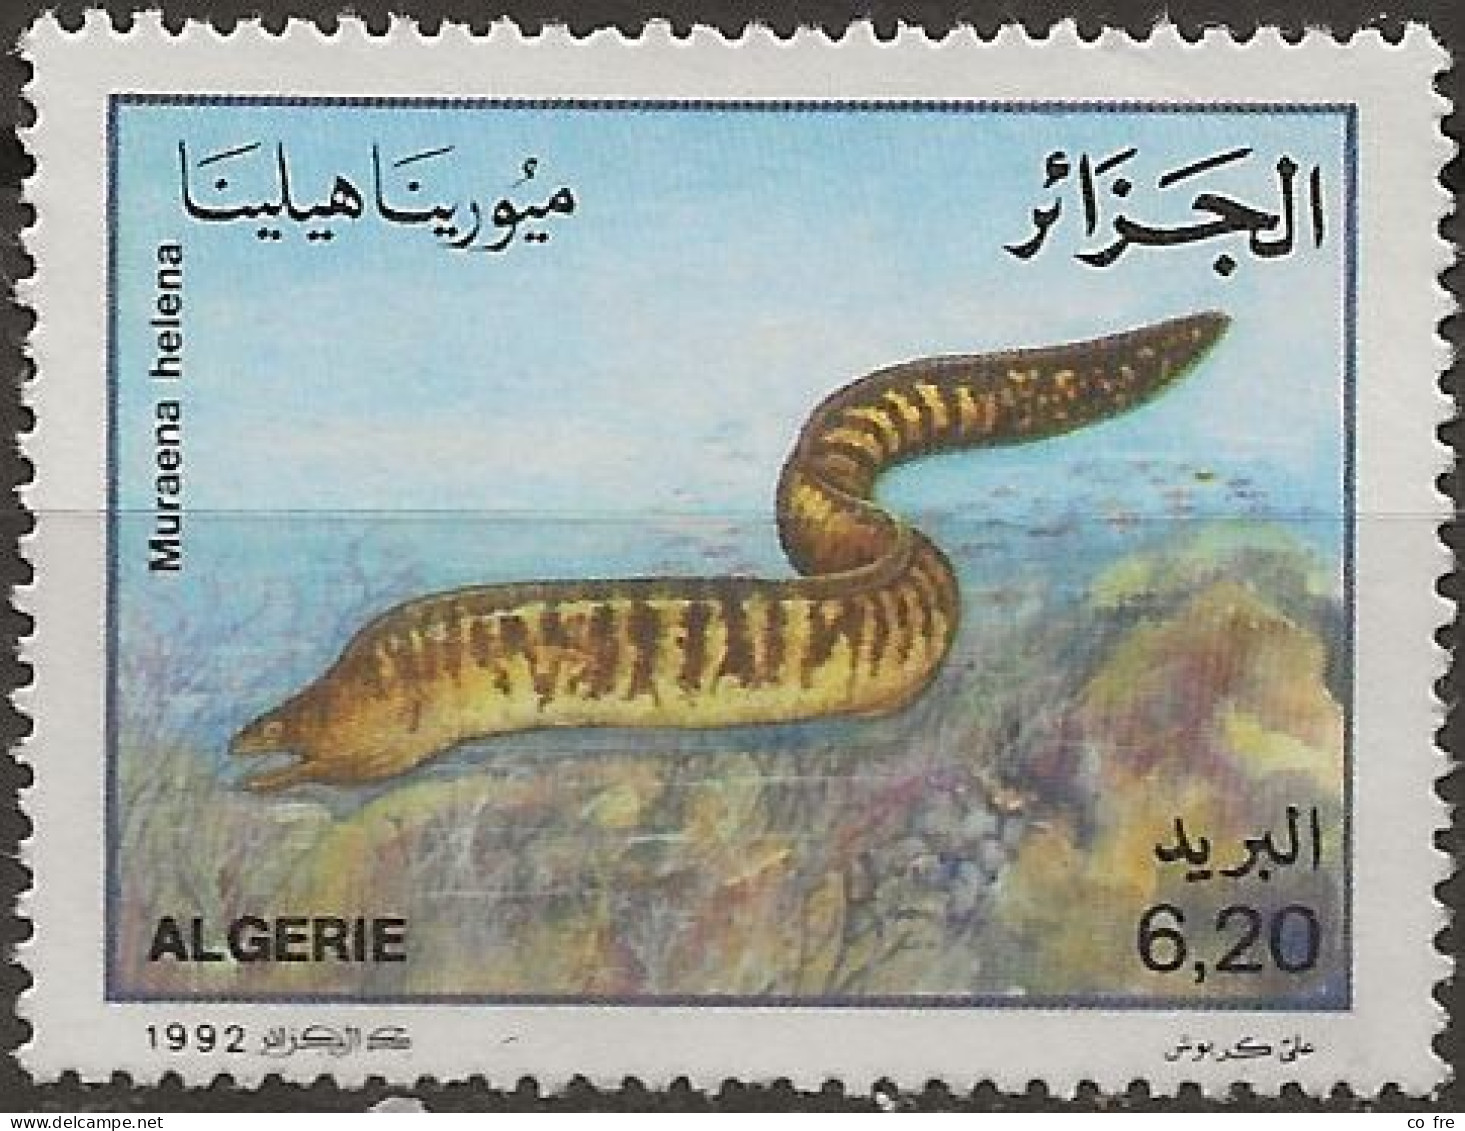 Algérie N°1031** (ref.2) - Algeria (1962-...)